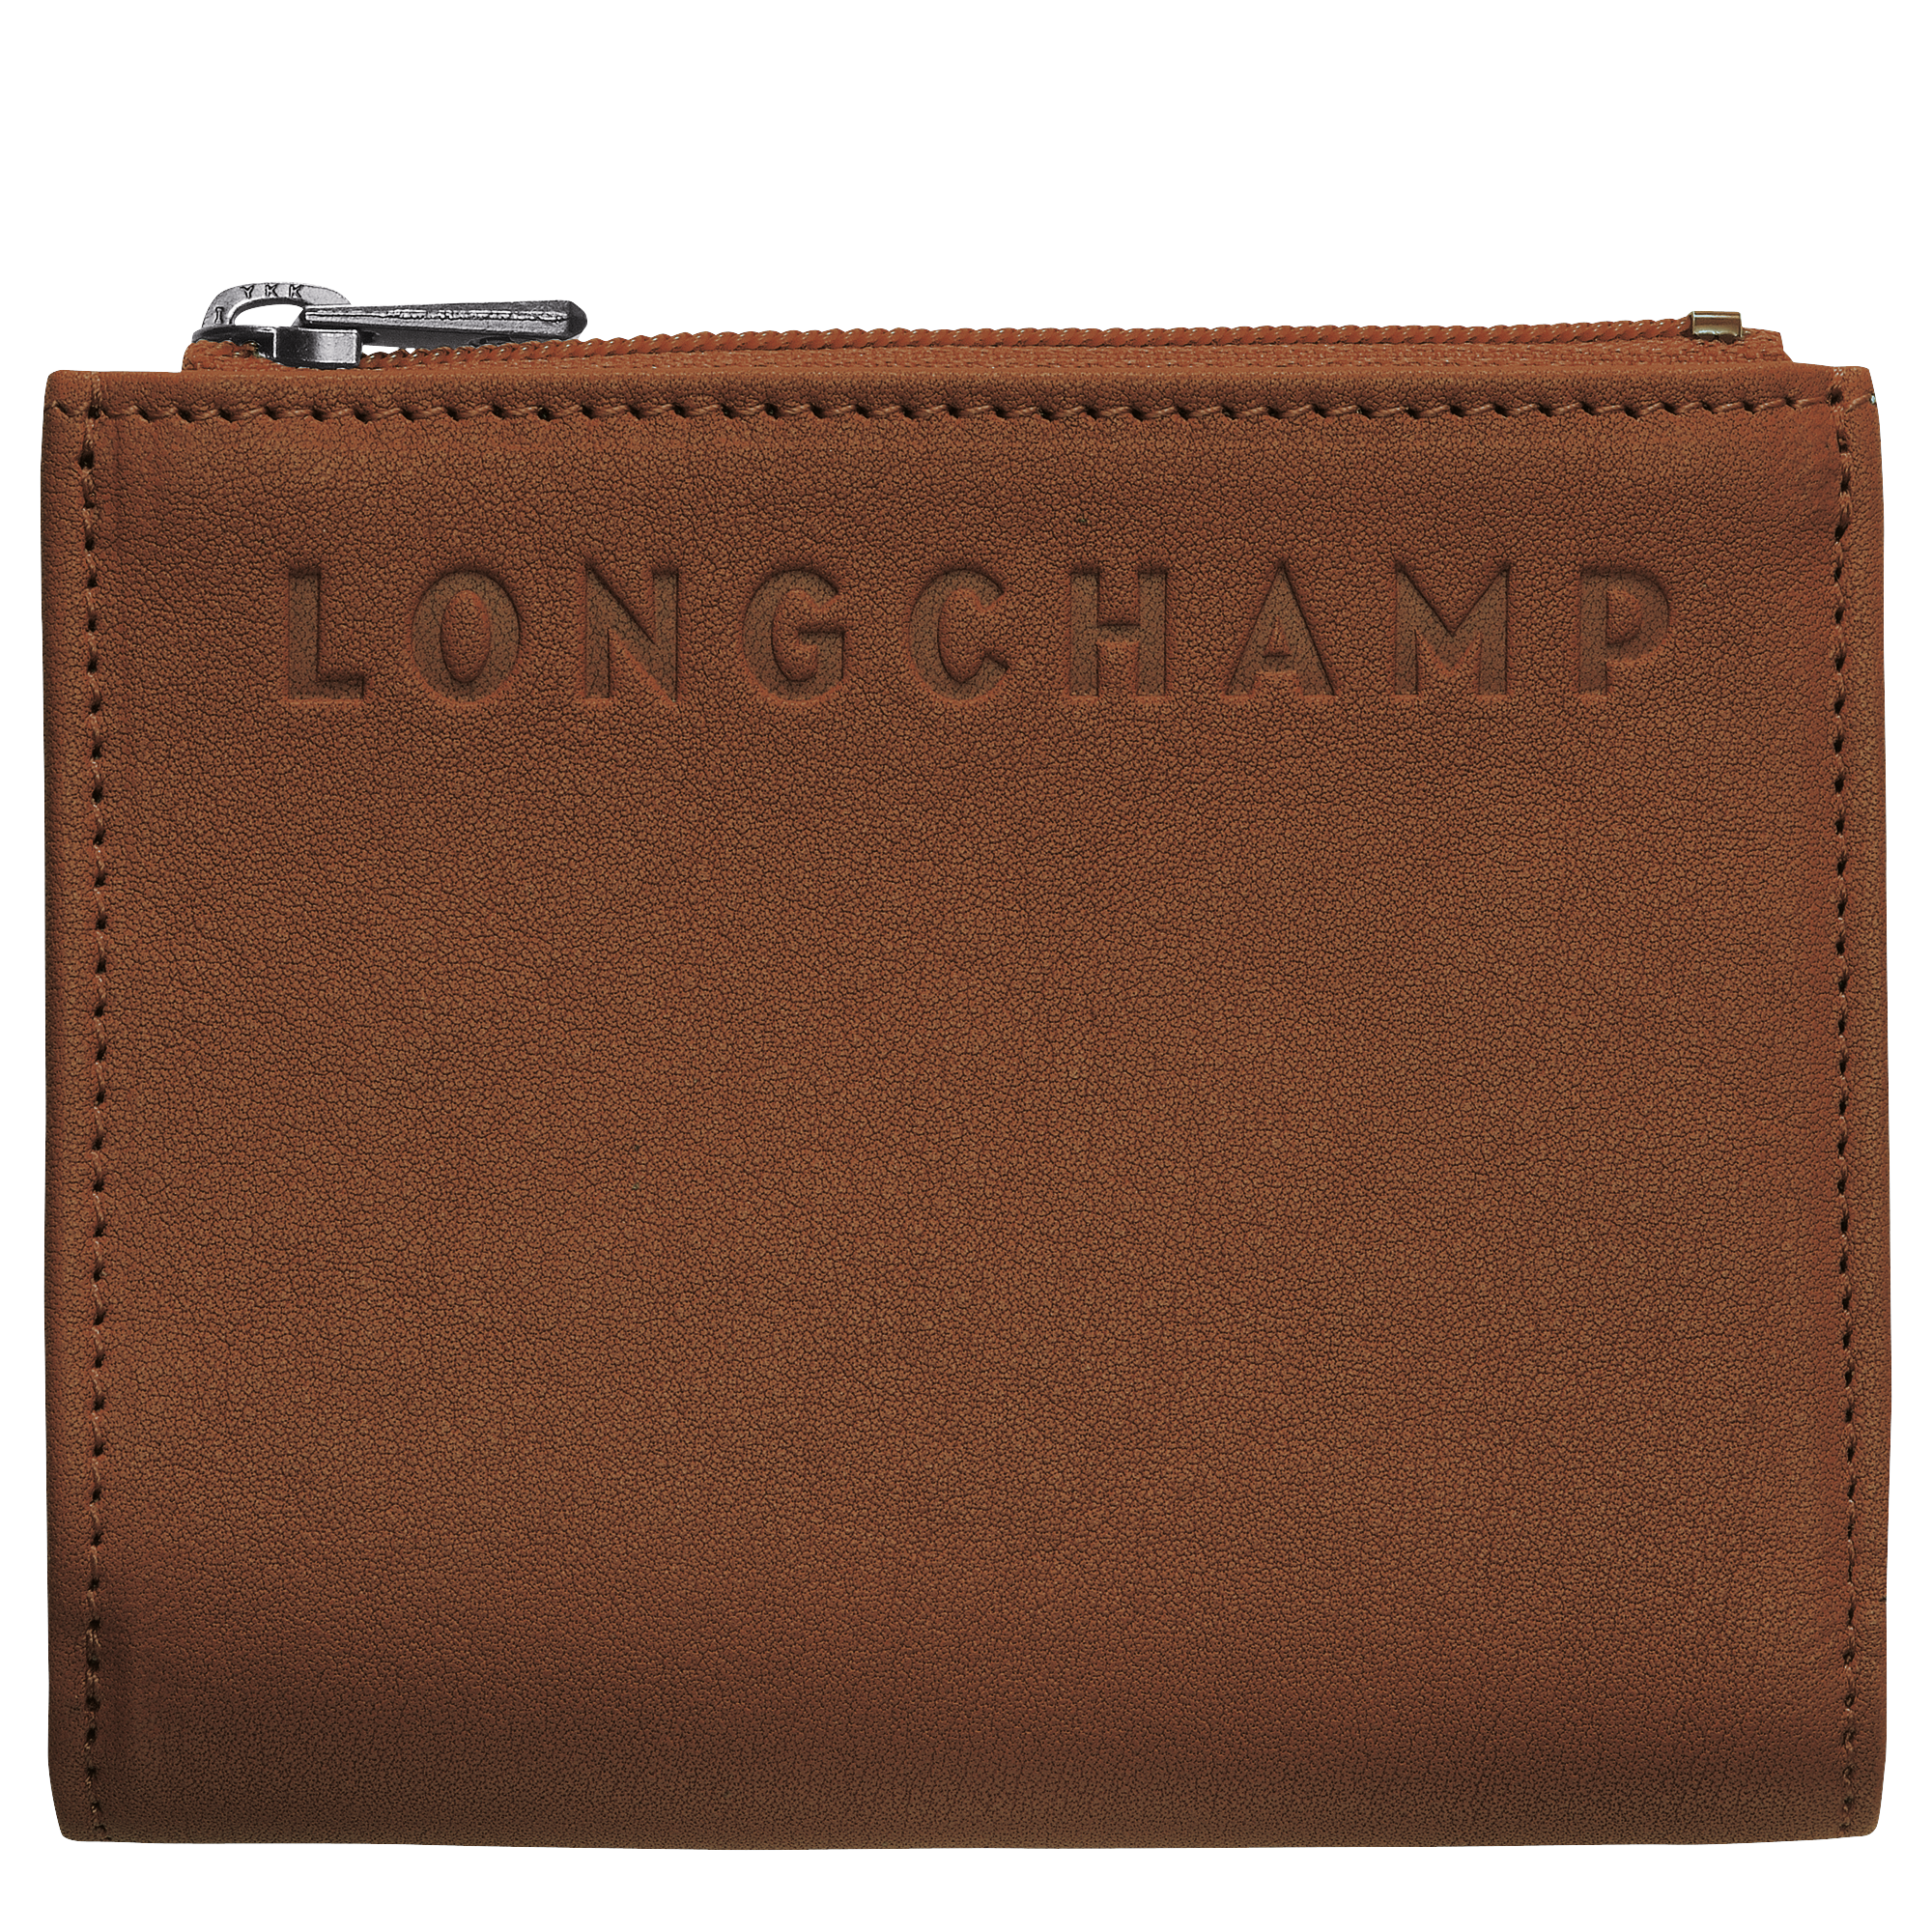 longchamps wallet